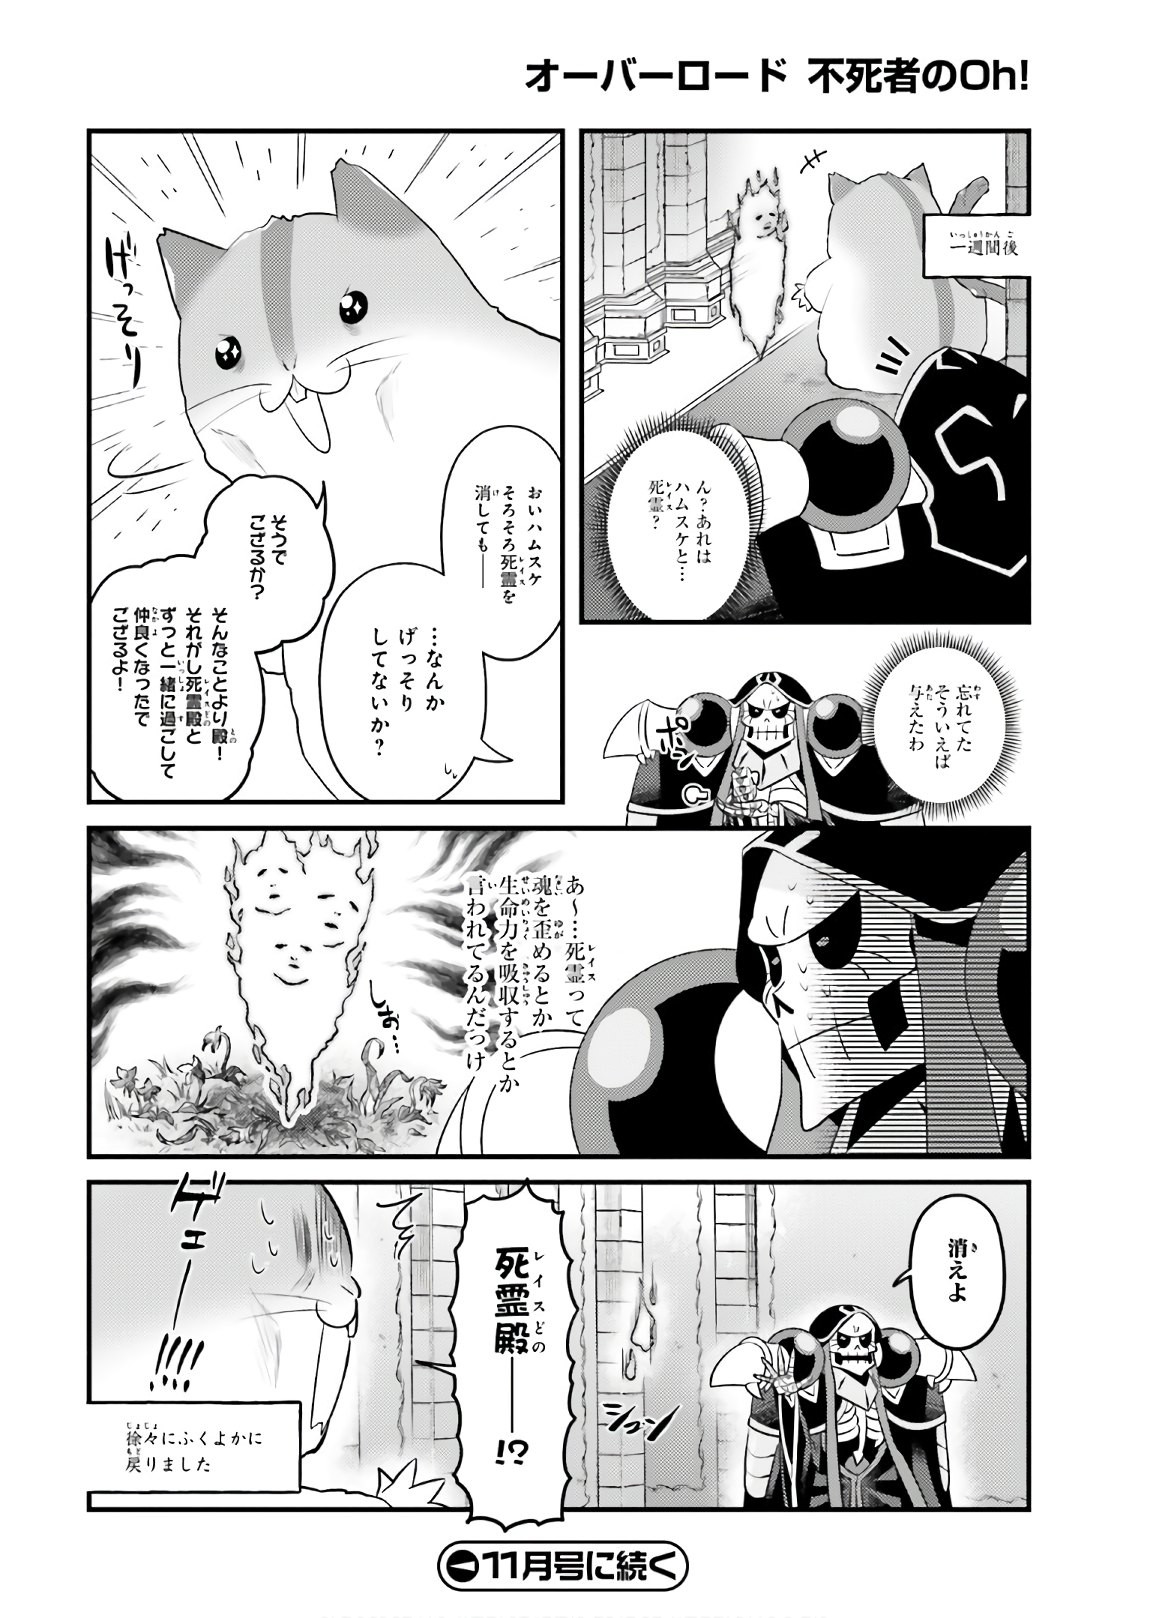 Overlord-Fushisha-no-Oh - Chapter 41 - Page 20